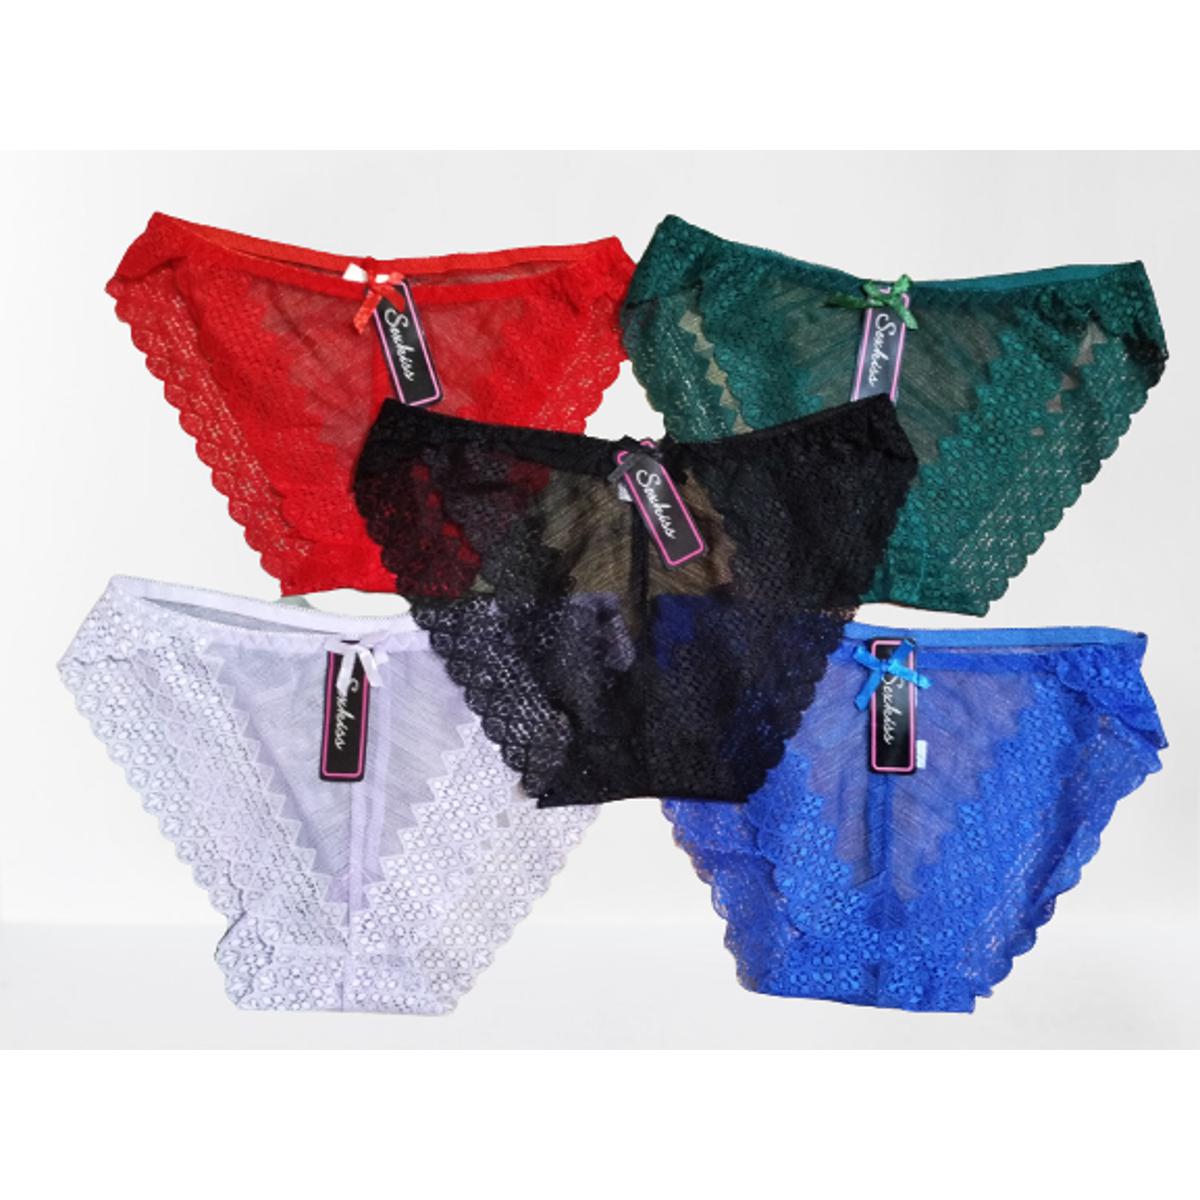 Fancy underwear (Pack of 6) panty / undergarments Best quality